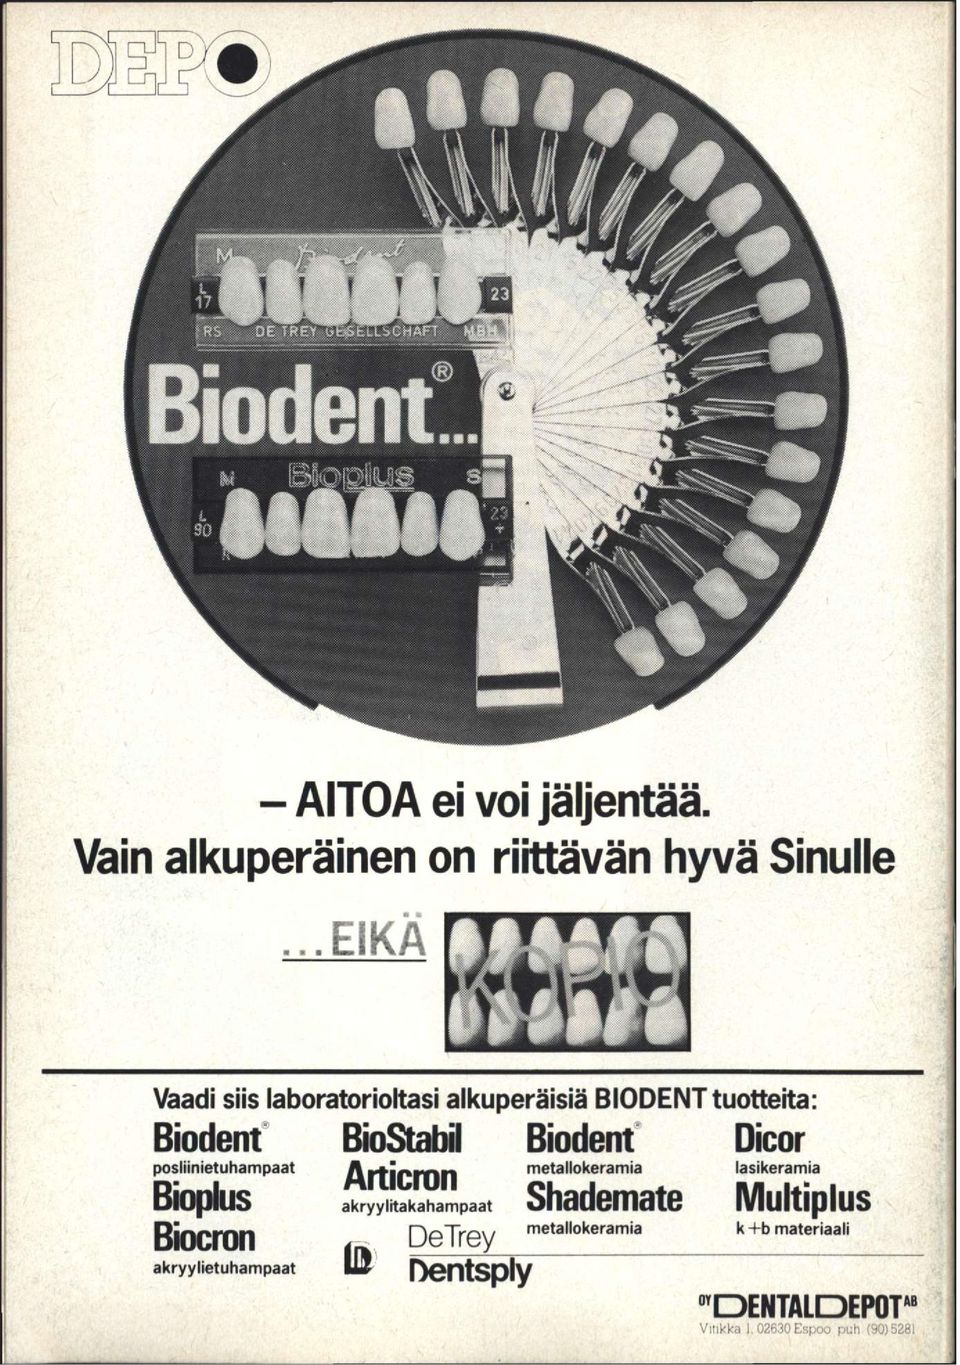 Bioplus Biocron akryylietuhampaat BioStabil Biodent Dicor jqfqp metallokeramia lasikeramia